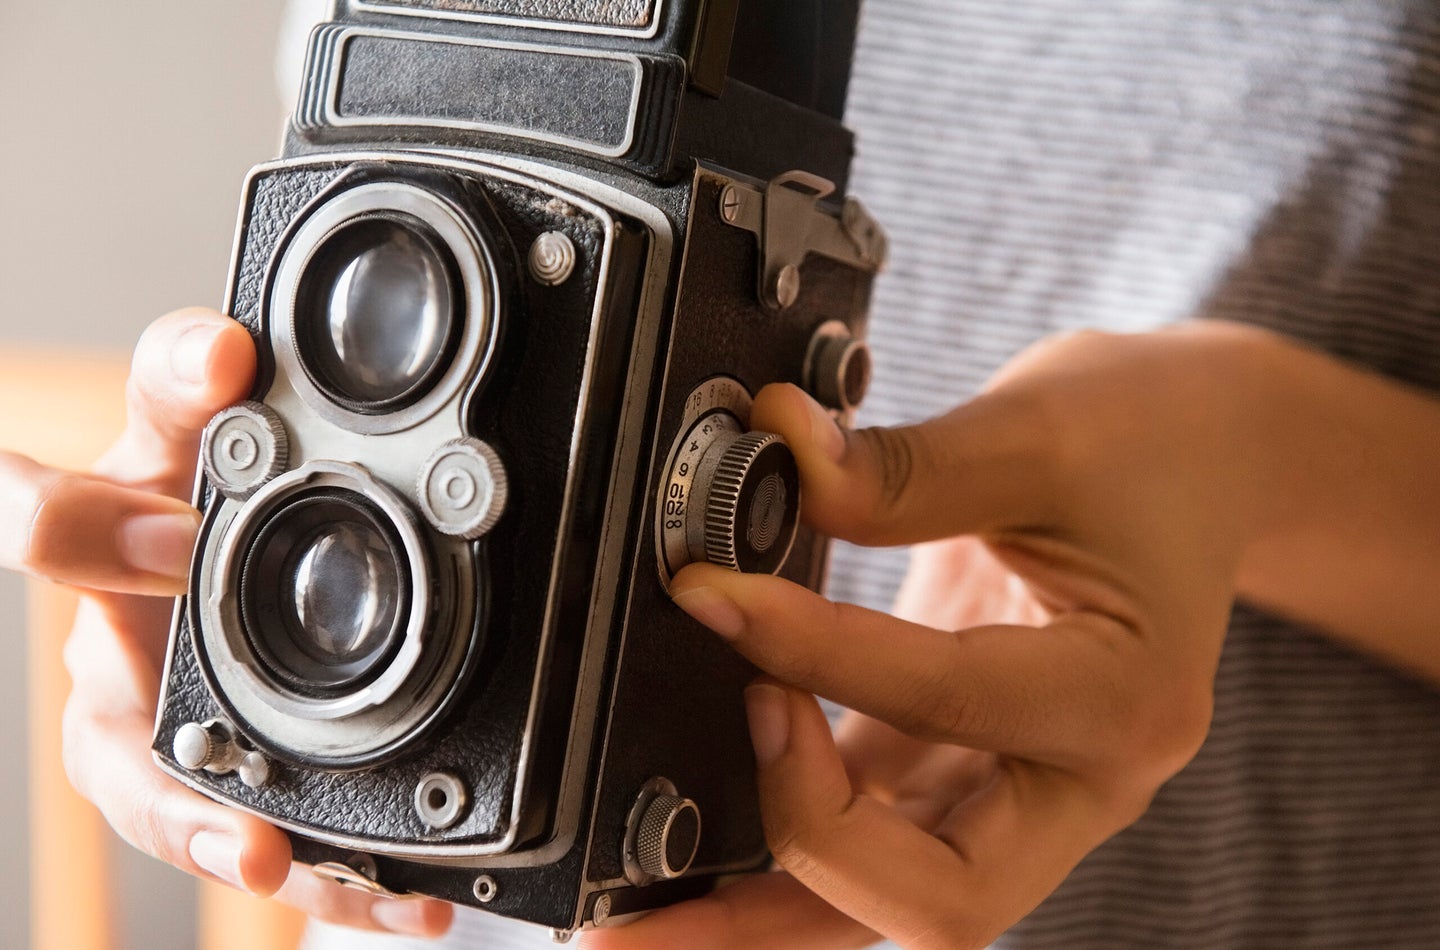 A Rolleiflex medium format camera